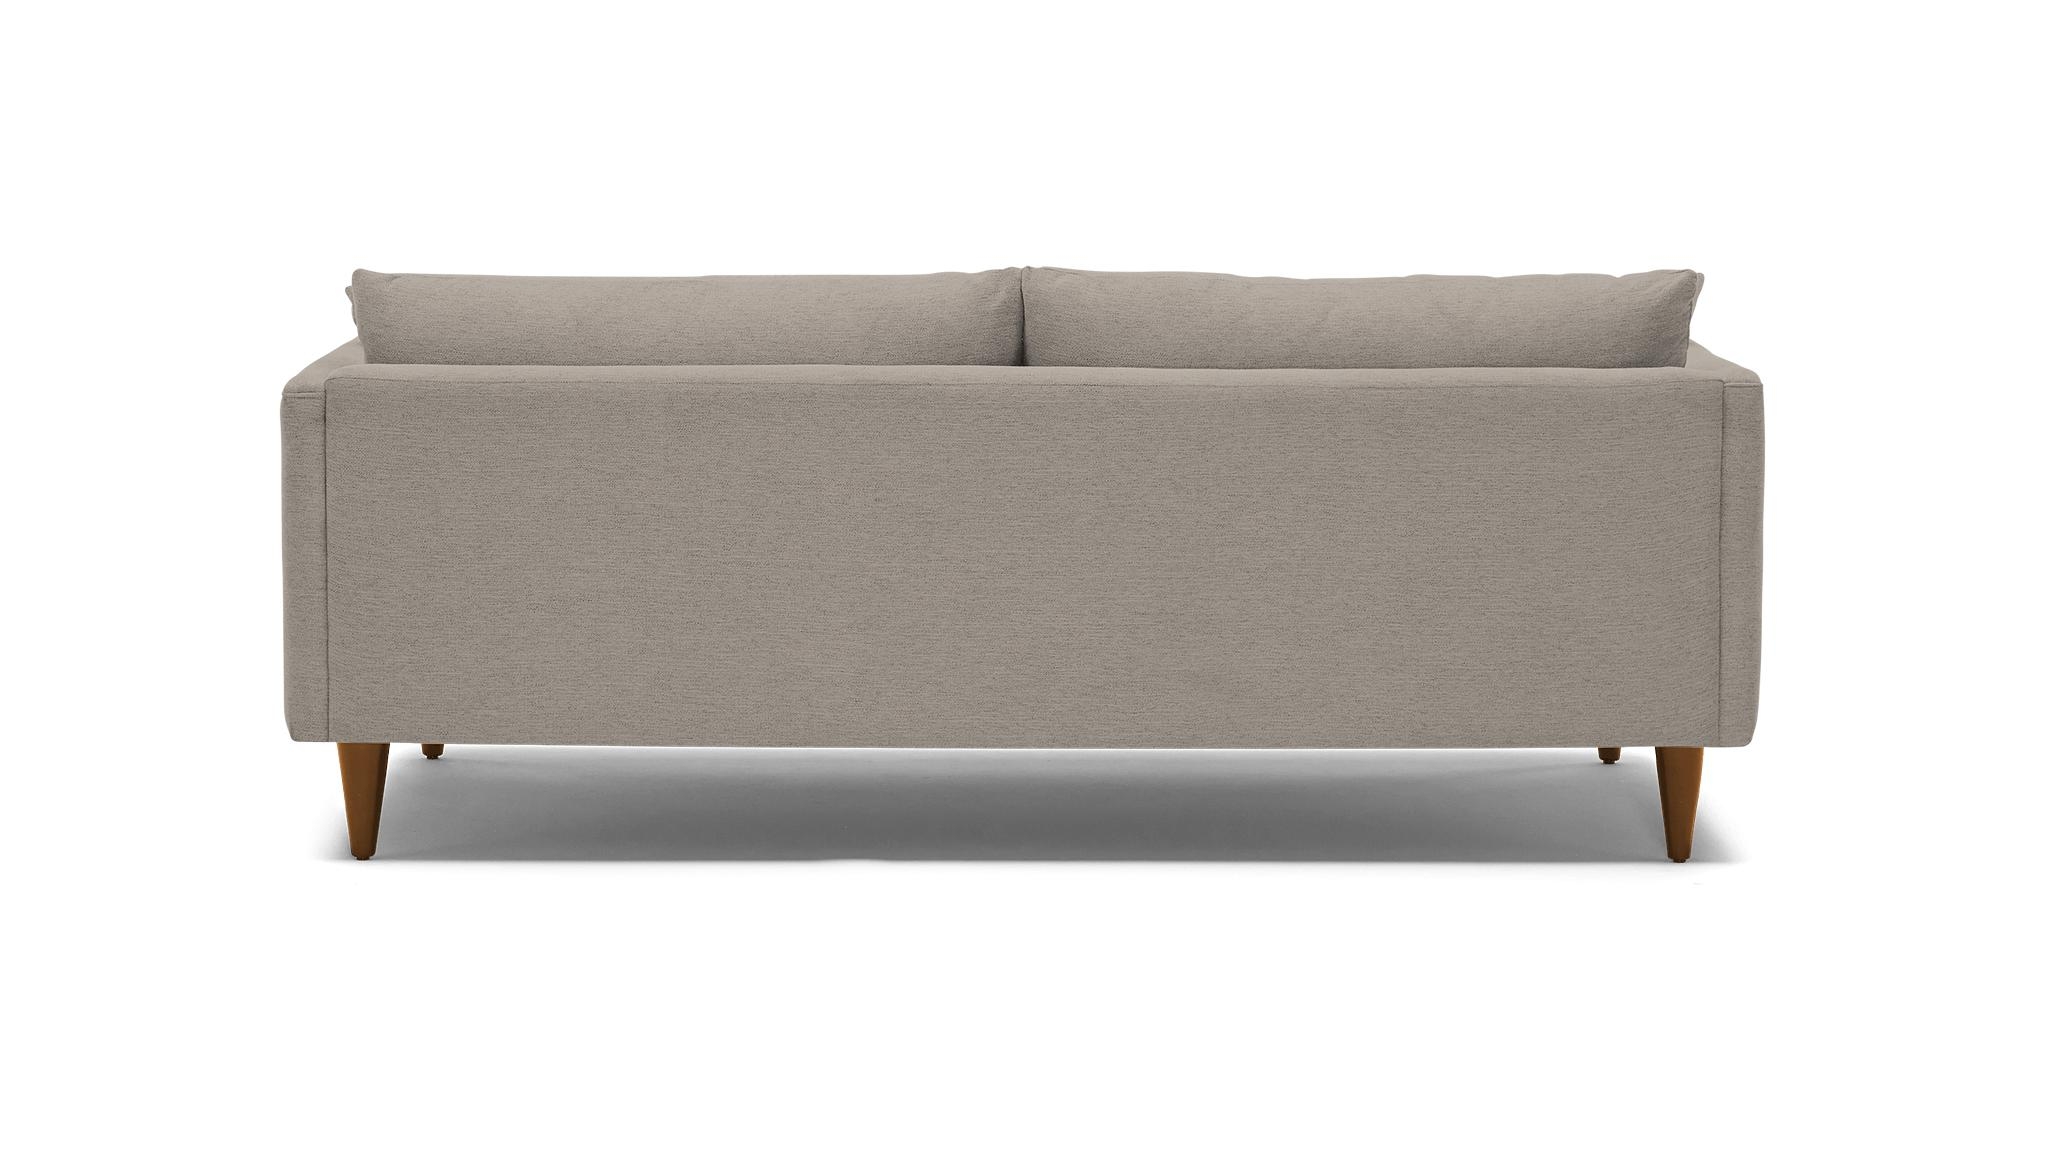 Beige/White Lewis Mid Century Modern Sofa - Prime Stone - Mocha - Cone - Image 4